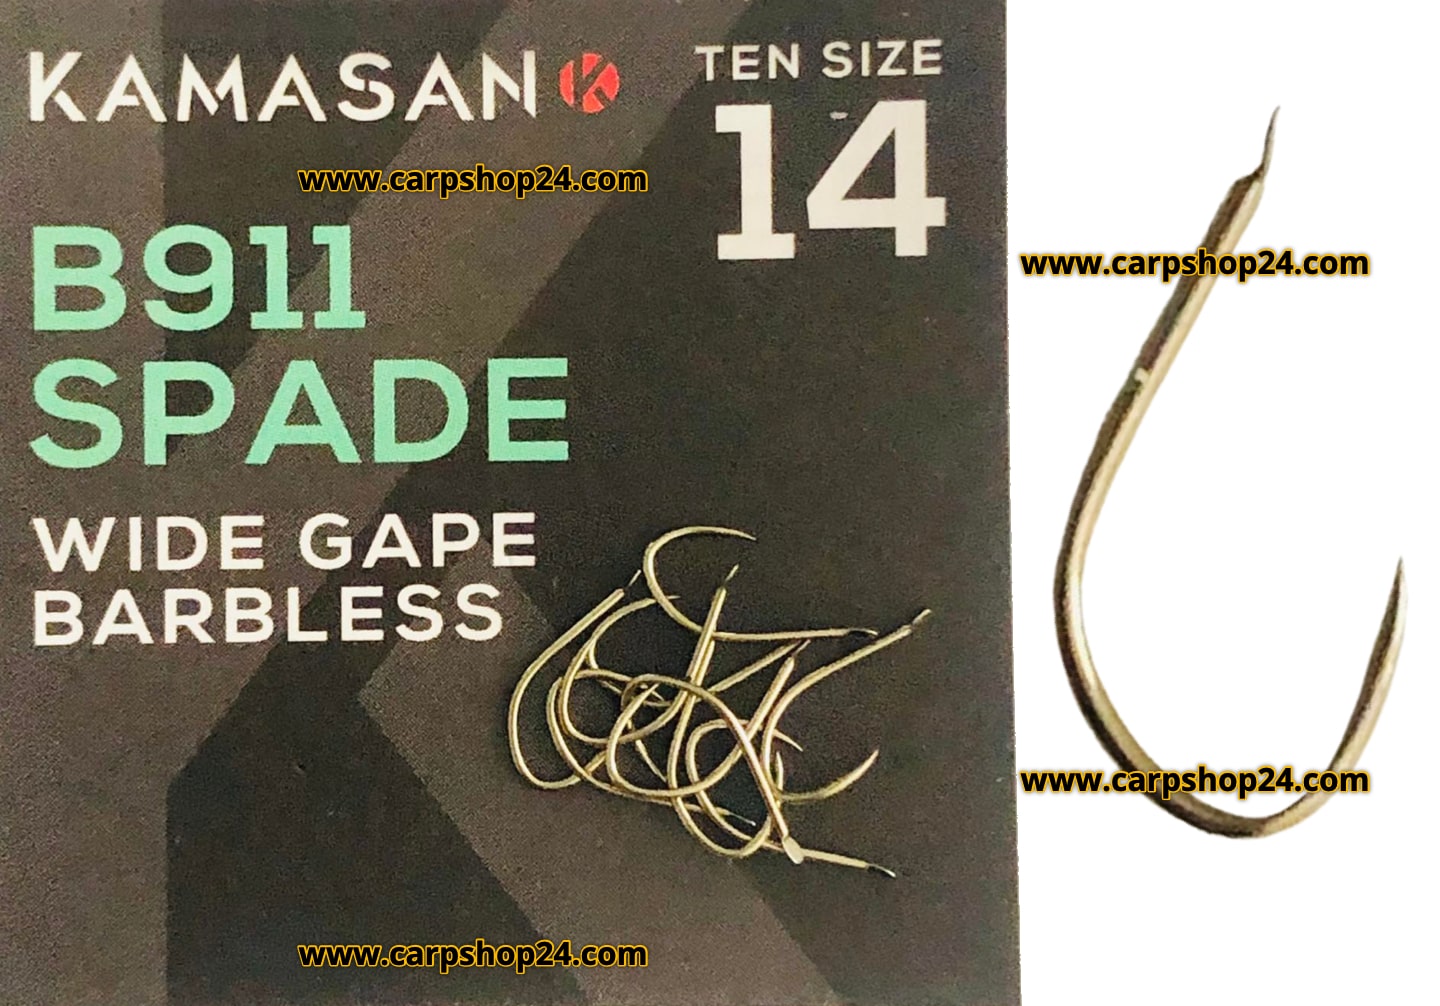 kamasan B911 wide gape barbless spade end size 14